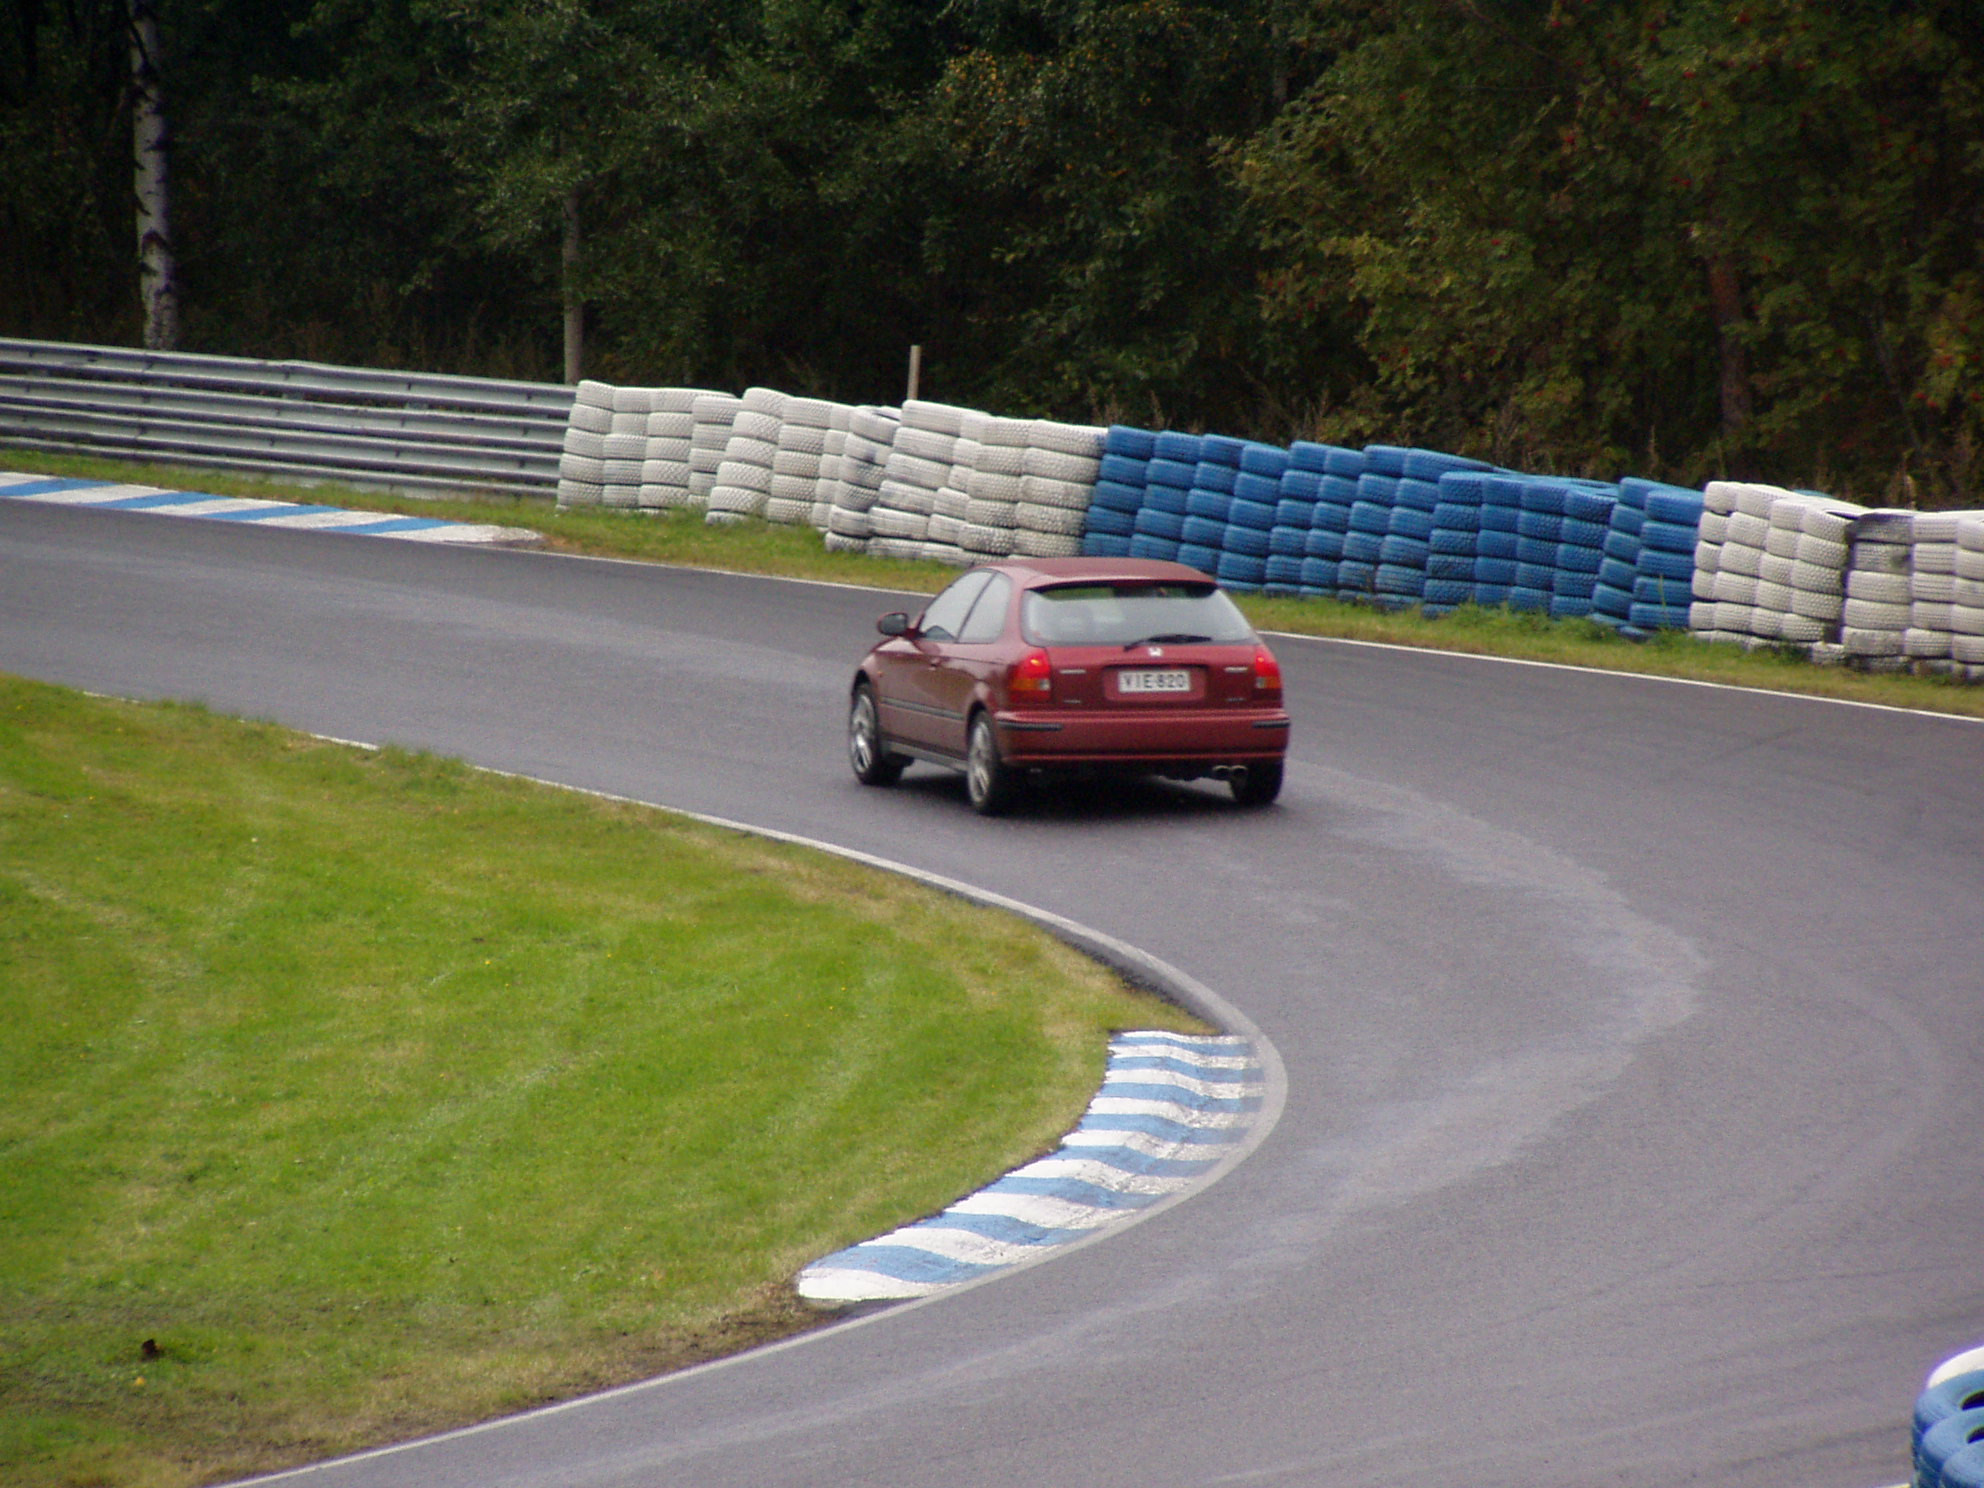 Sunday on racetrack 18.9.2005, Honda Civic 1.6VTI 1998 radalla